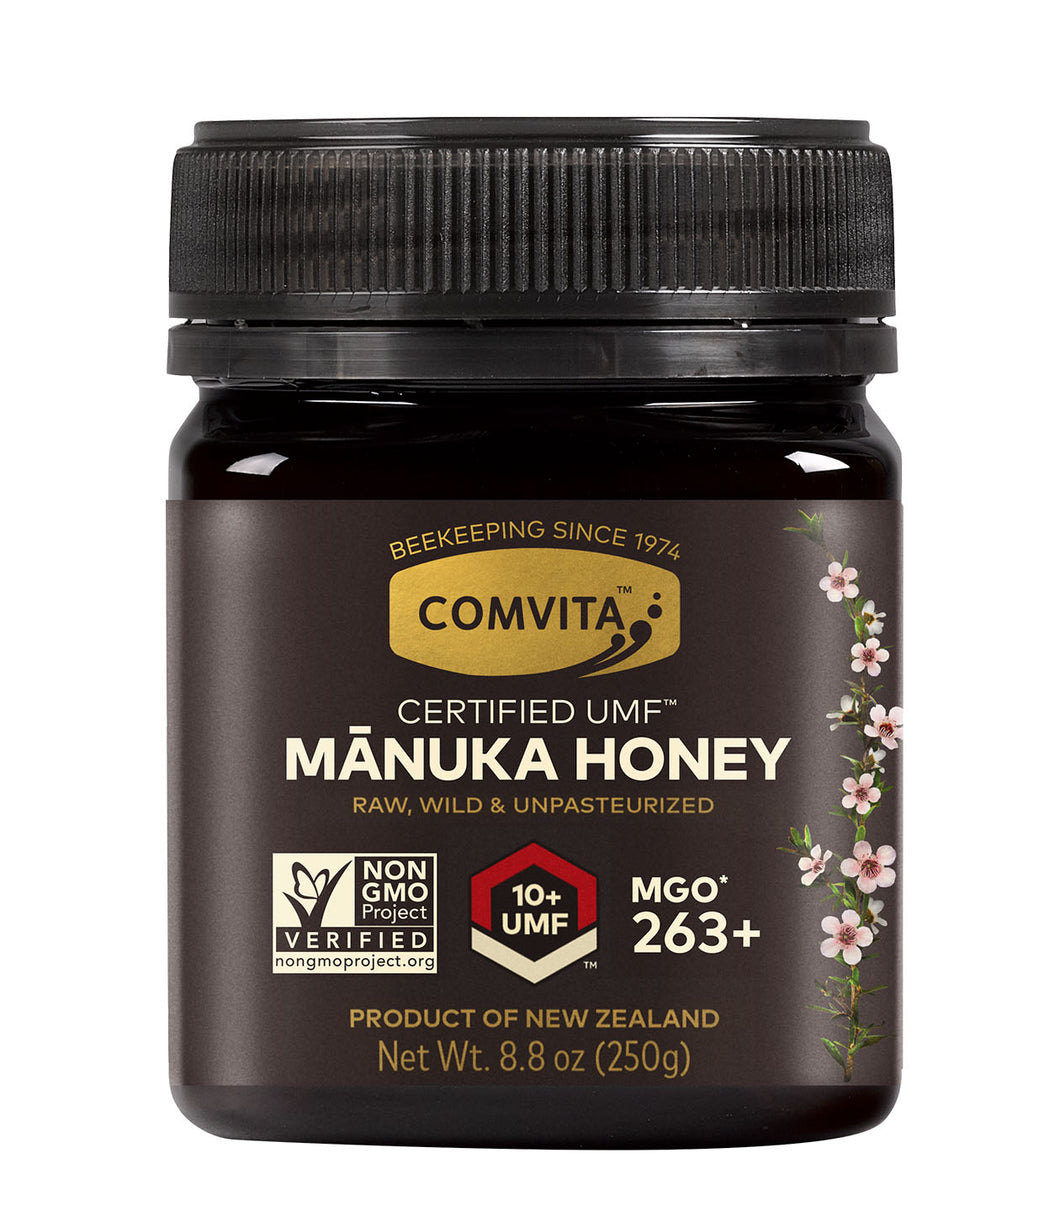 Comvita Manuka Honey UMF 10+